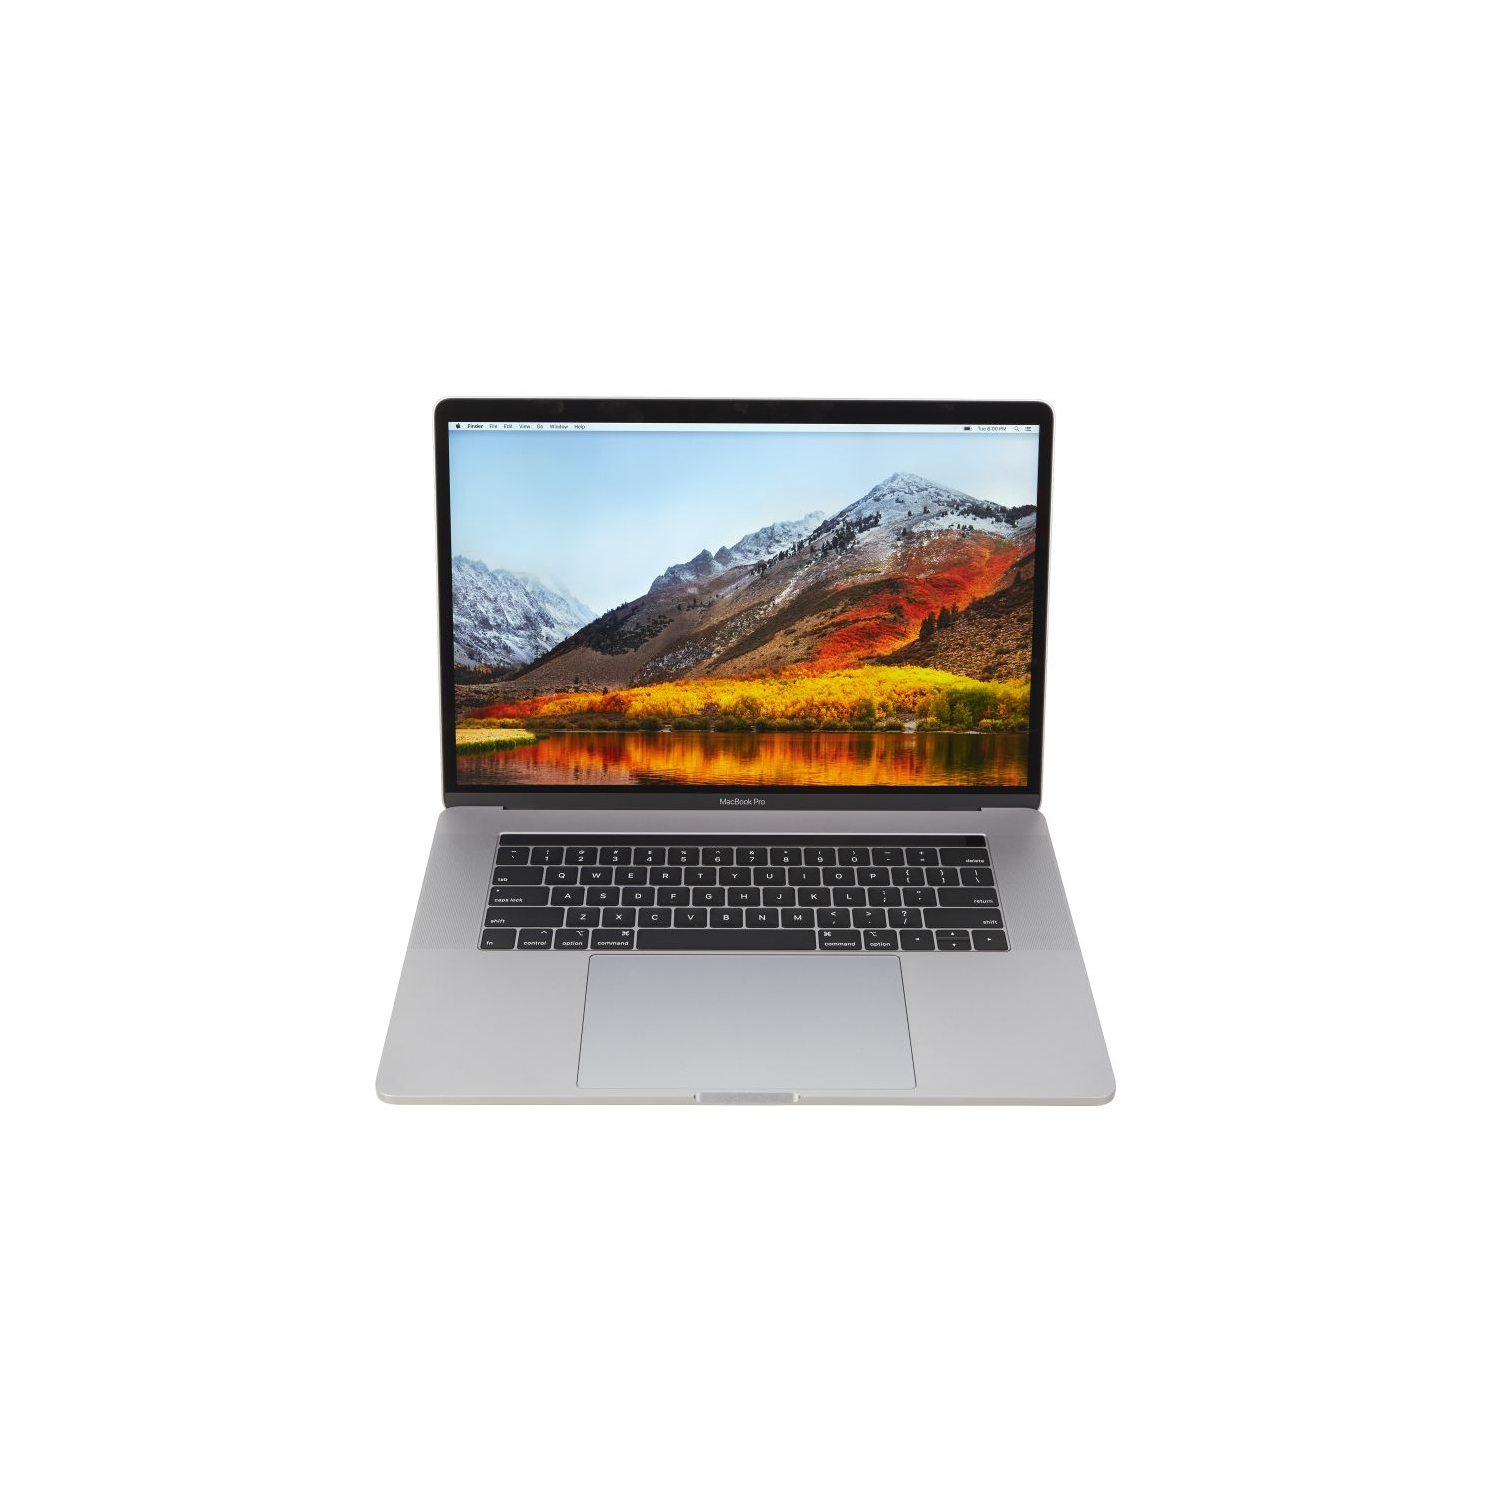 Refurbished (Good) - Apple MacBook Pro 15 Inch - Core i7 8750H